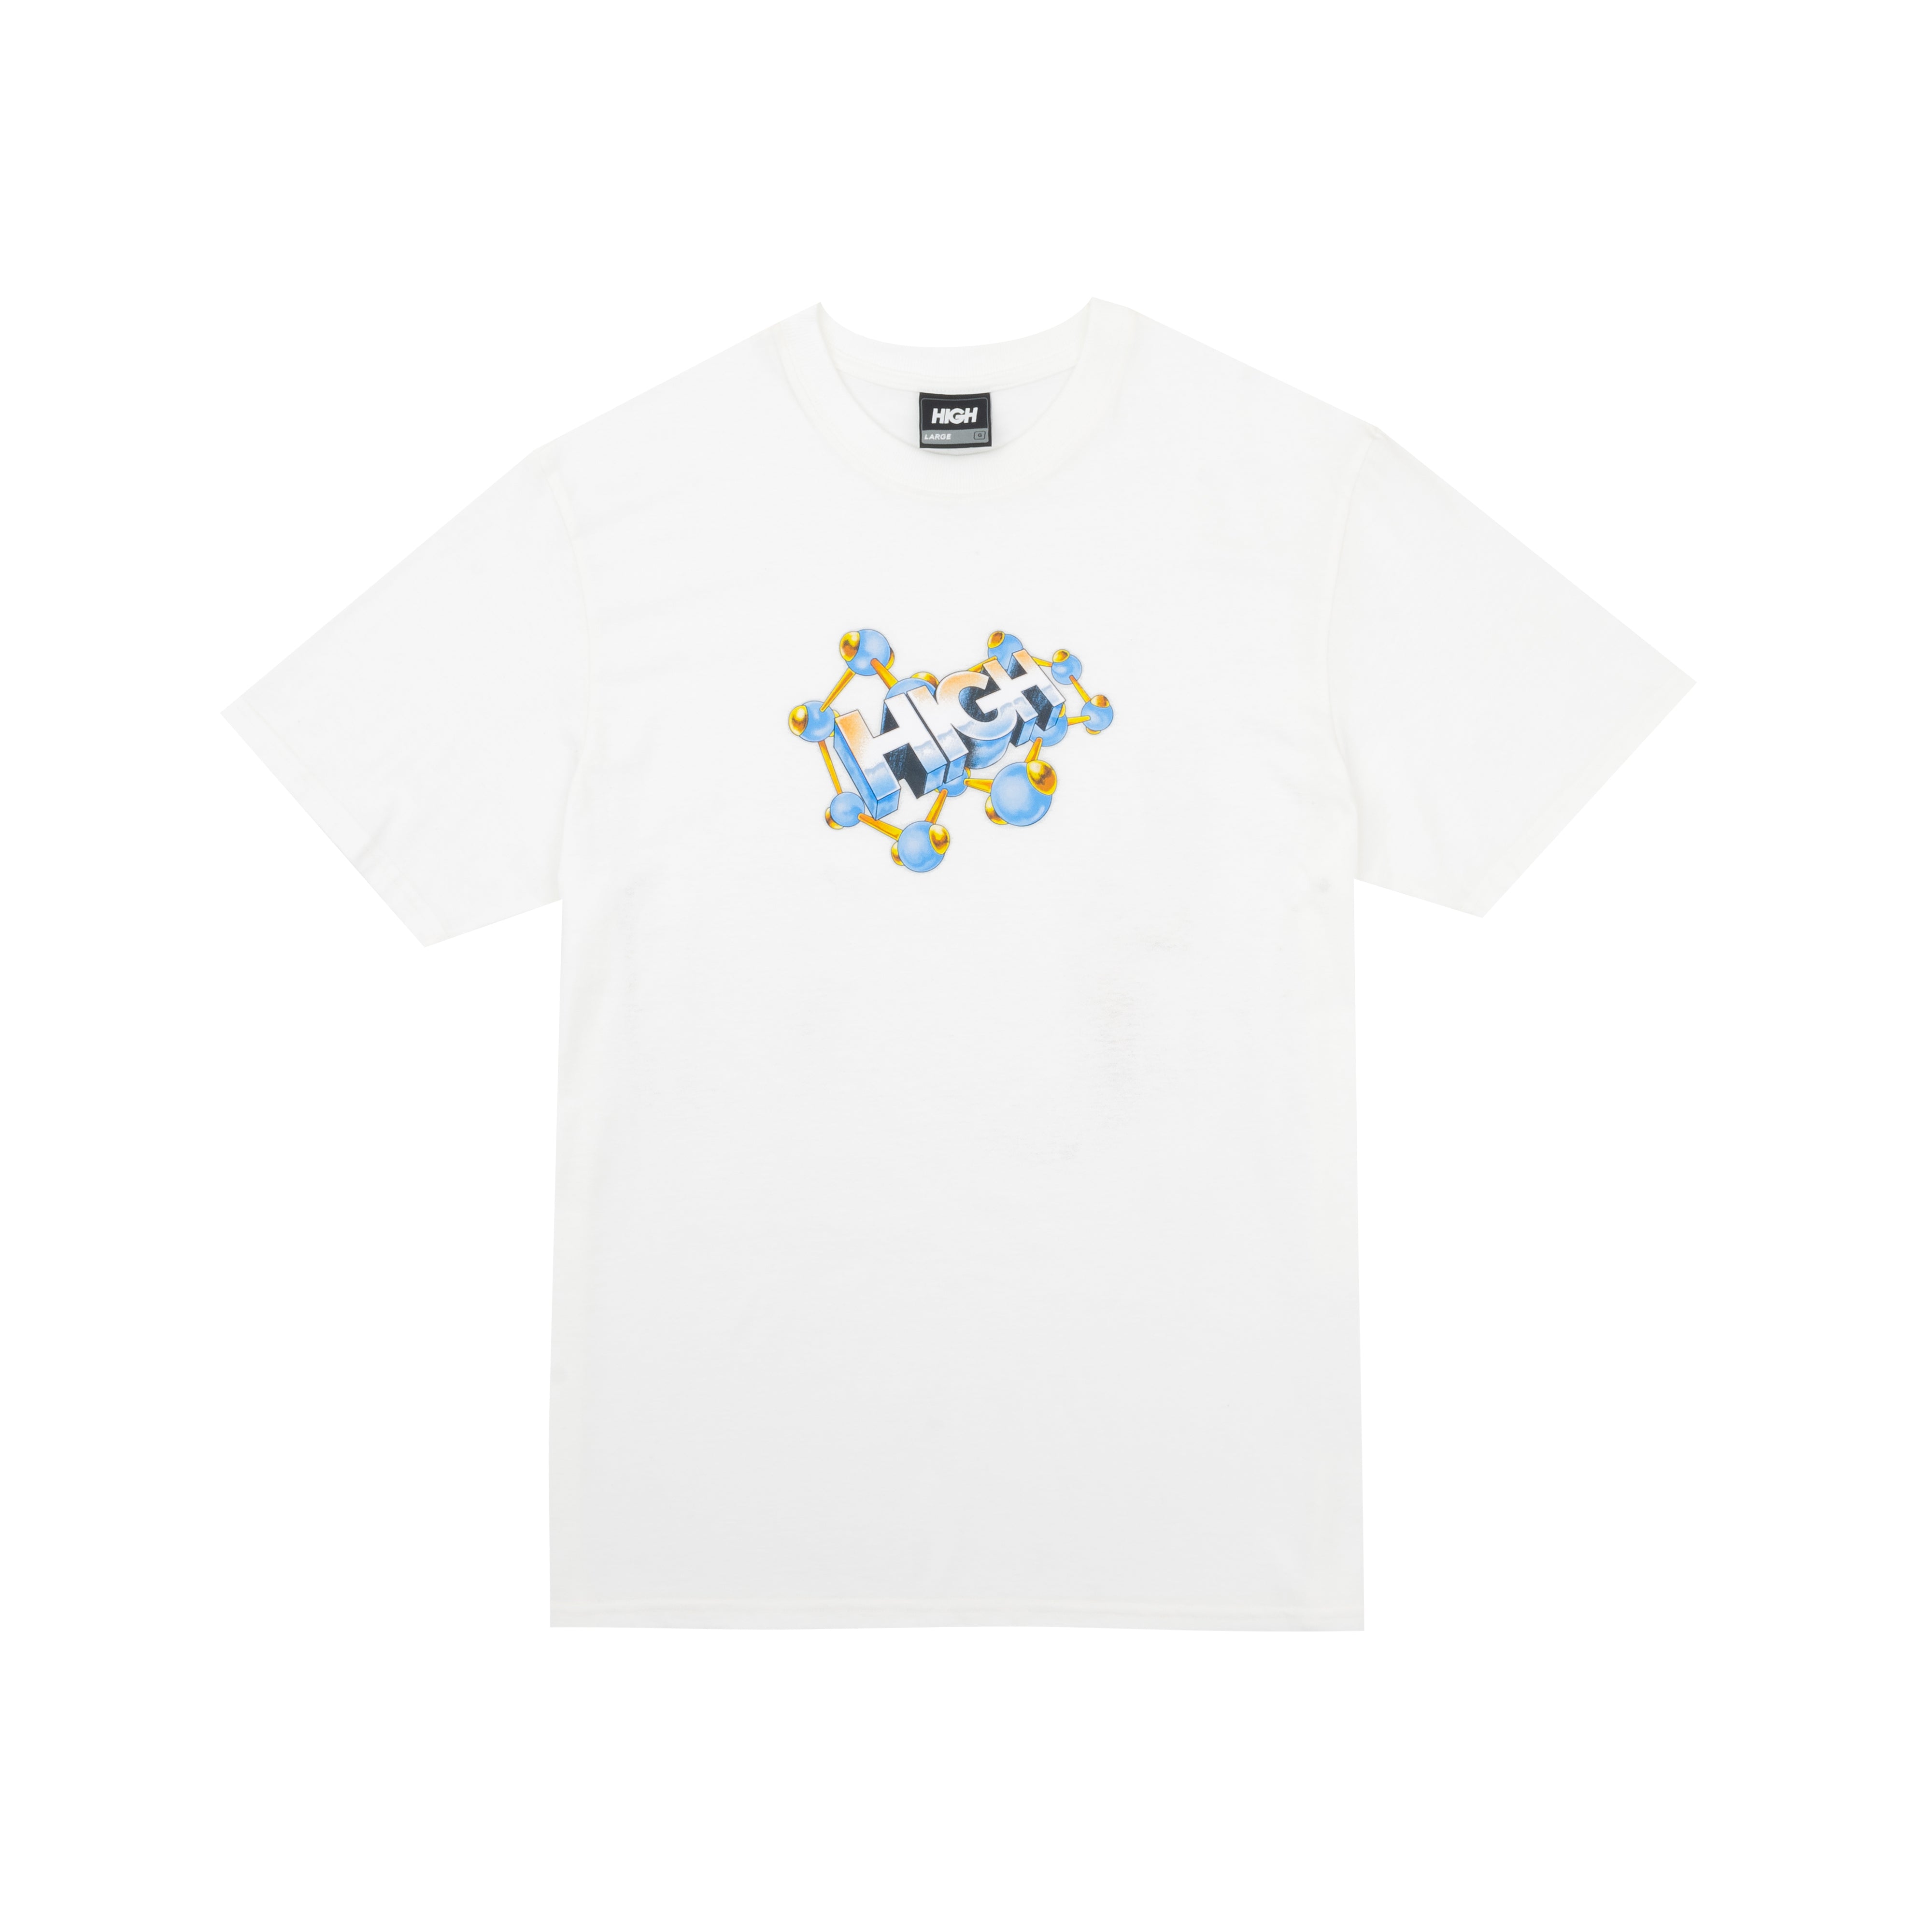 HIGH - Camiseta Molecules "White" - THE GAME